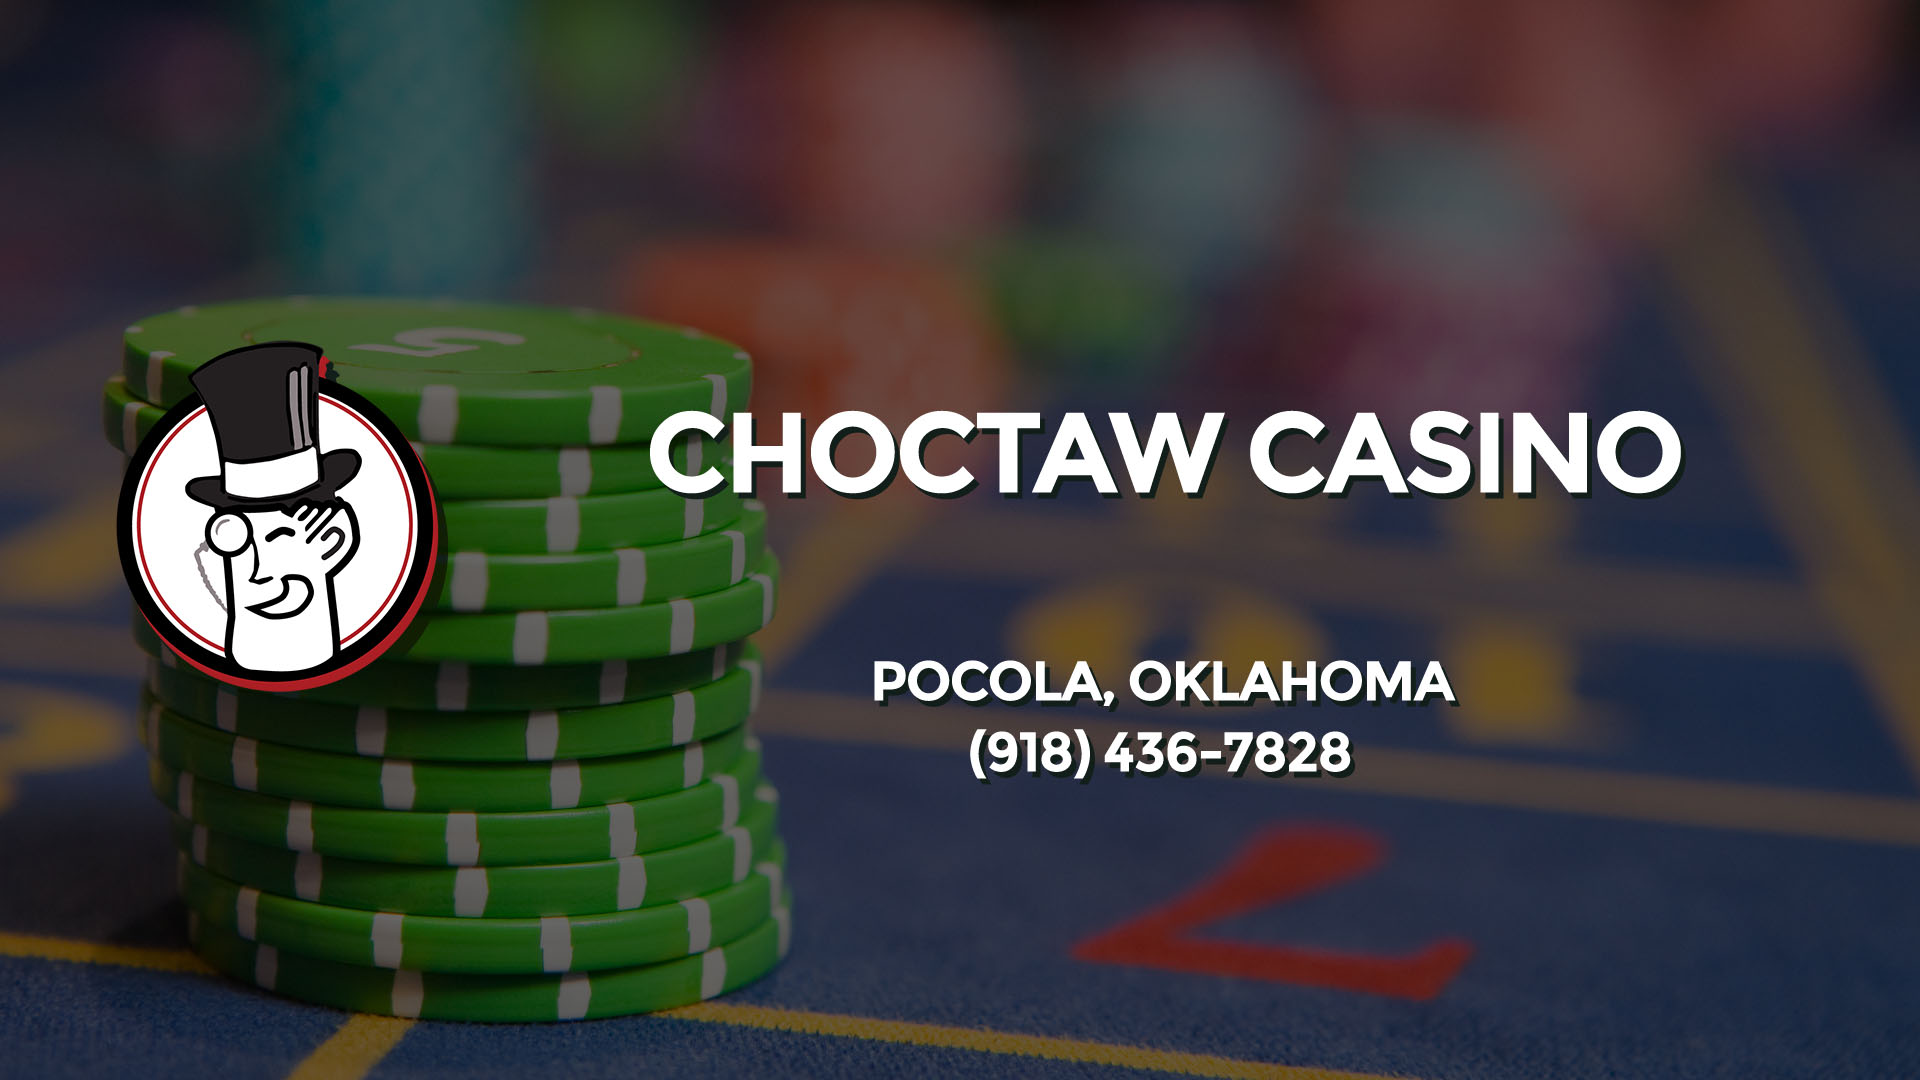 choctaw casino jobs pocola oklahoma